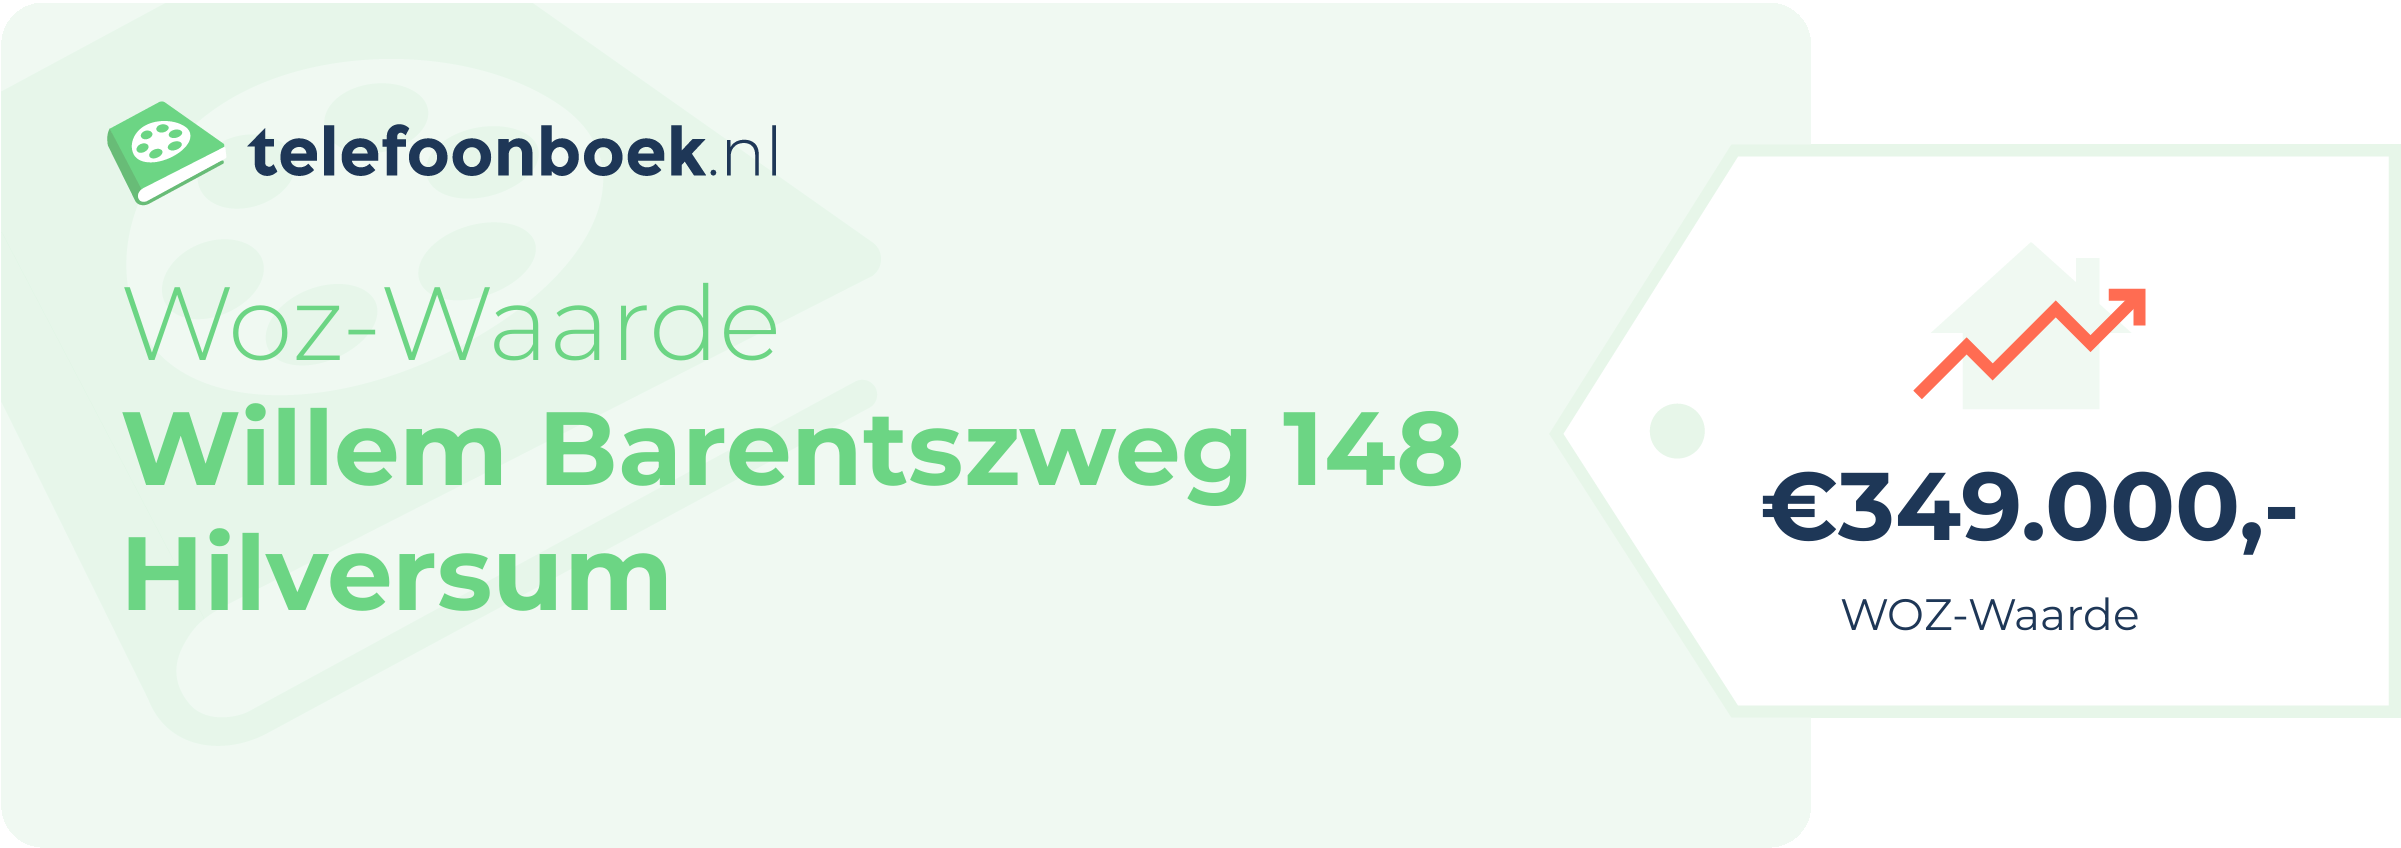 WOZ-waarde Willem Barentszweg 148 Hilversum